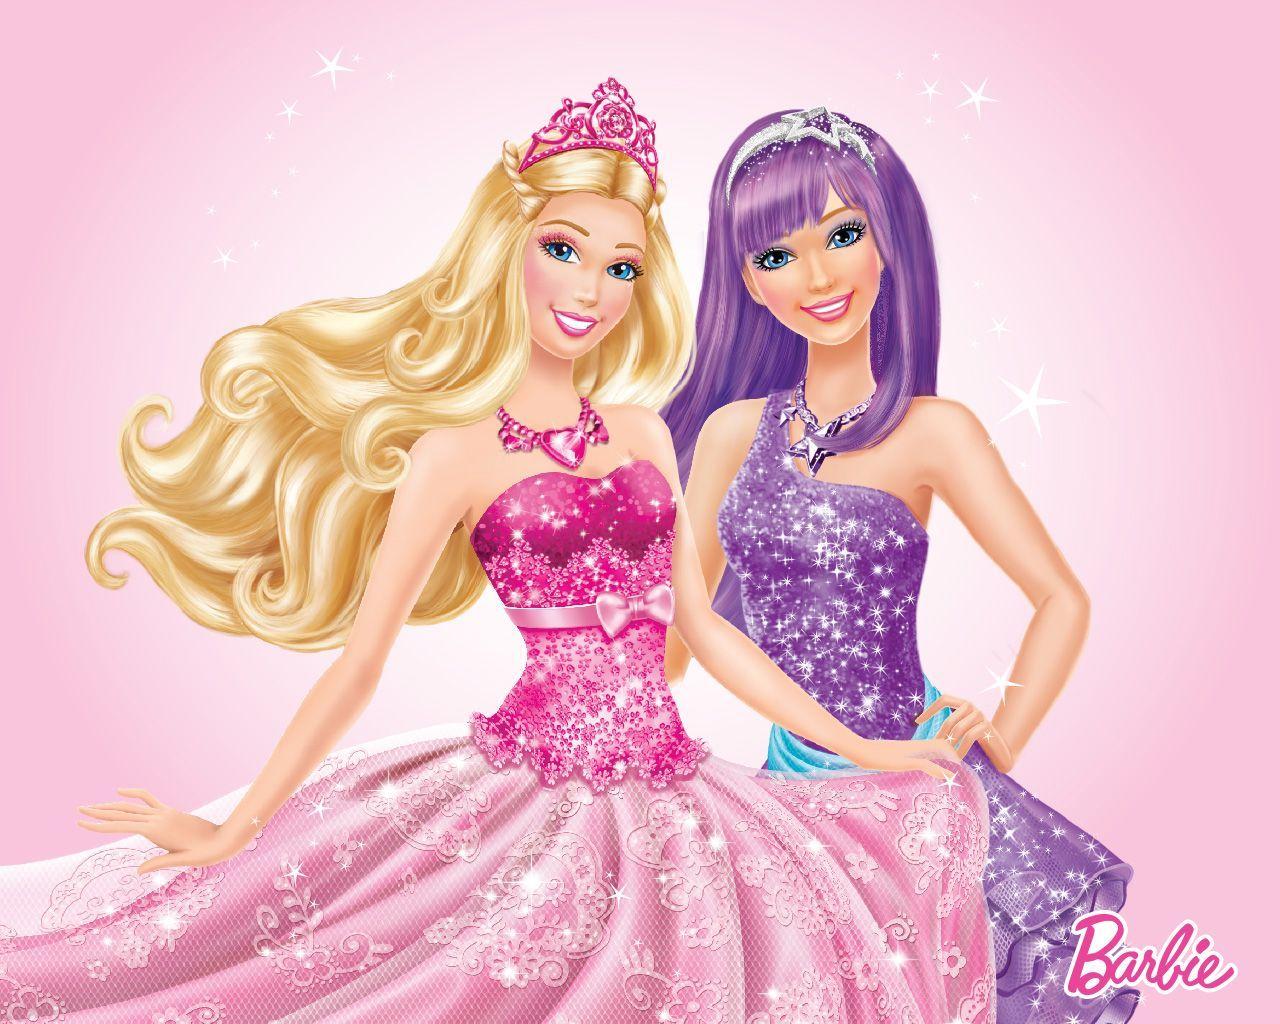 Barbie Movies Wallpaper: PaP wallpaper .com